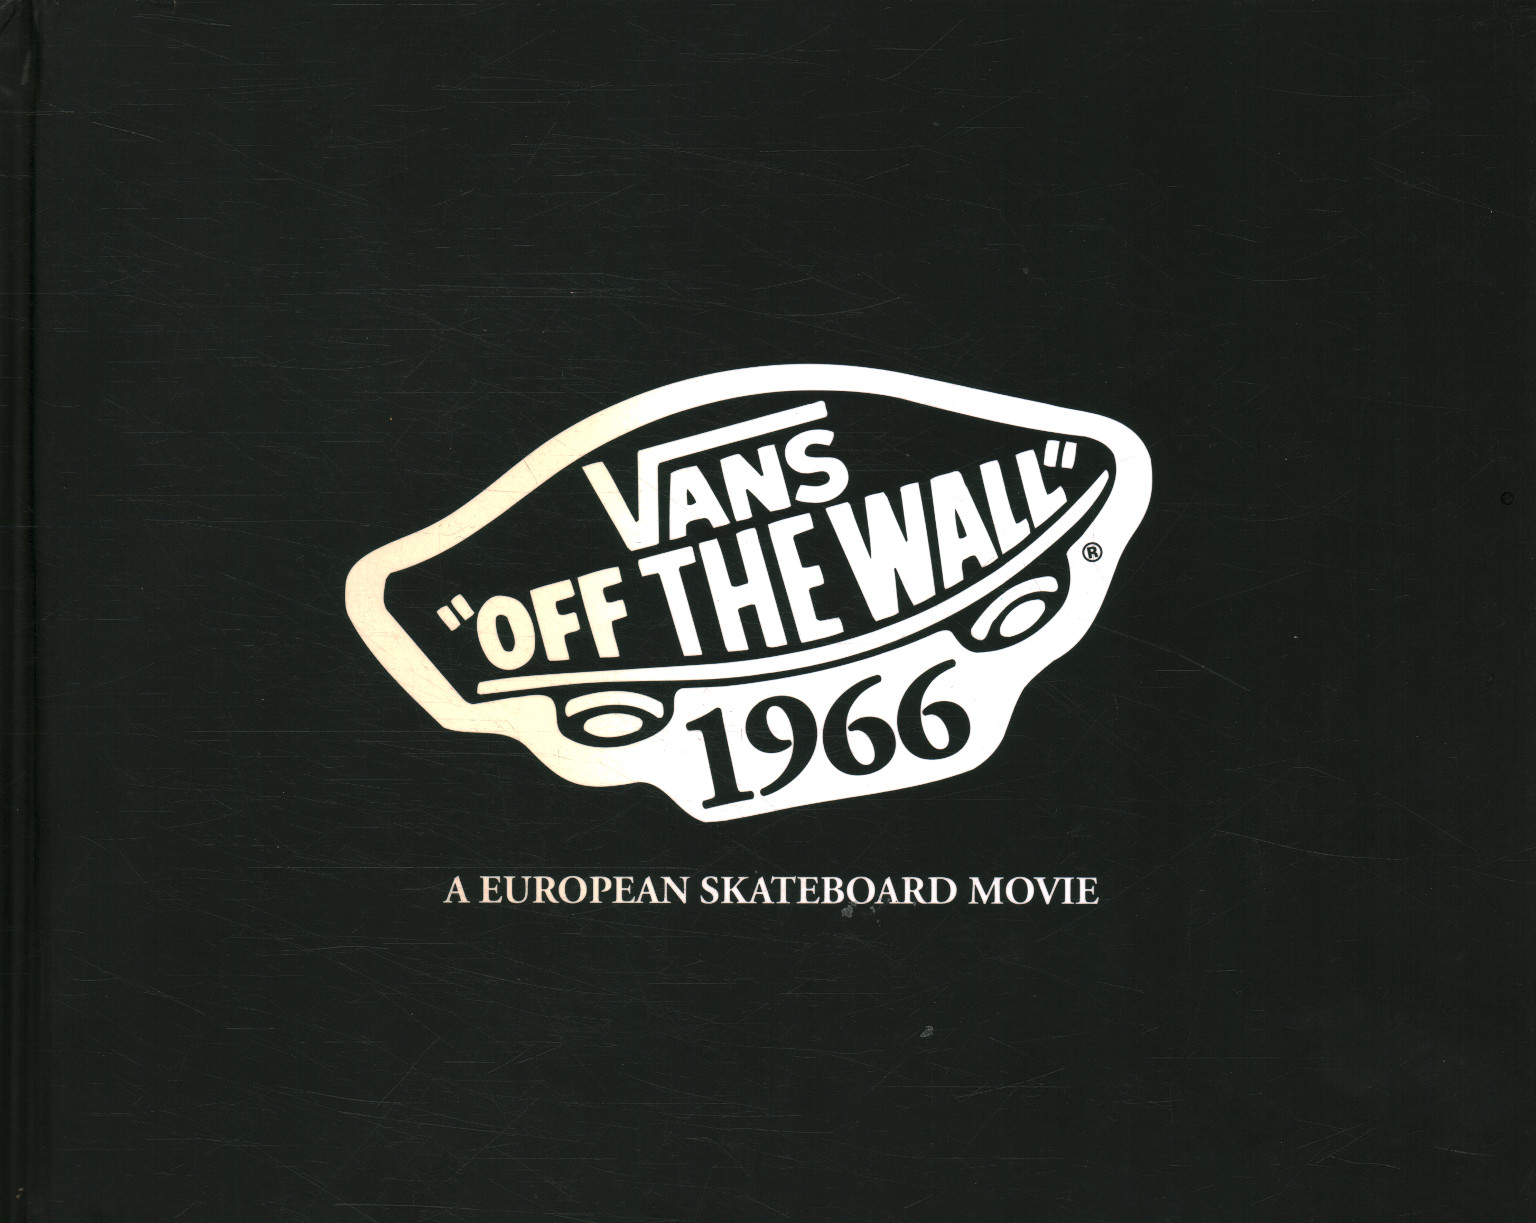 Vans Off The Wall 1966. Una S europea,Vans: Off The Wall 1966. Una europea